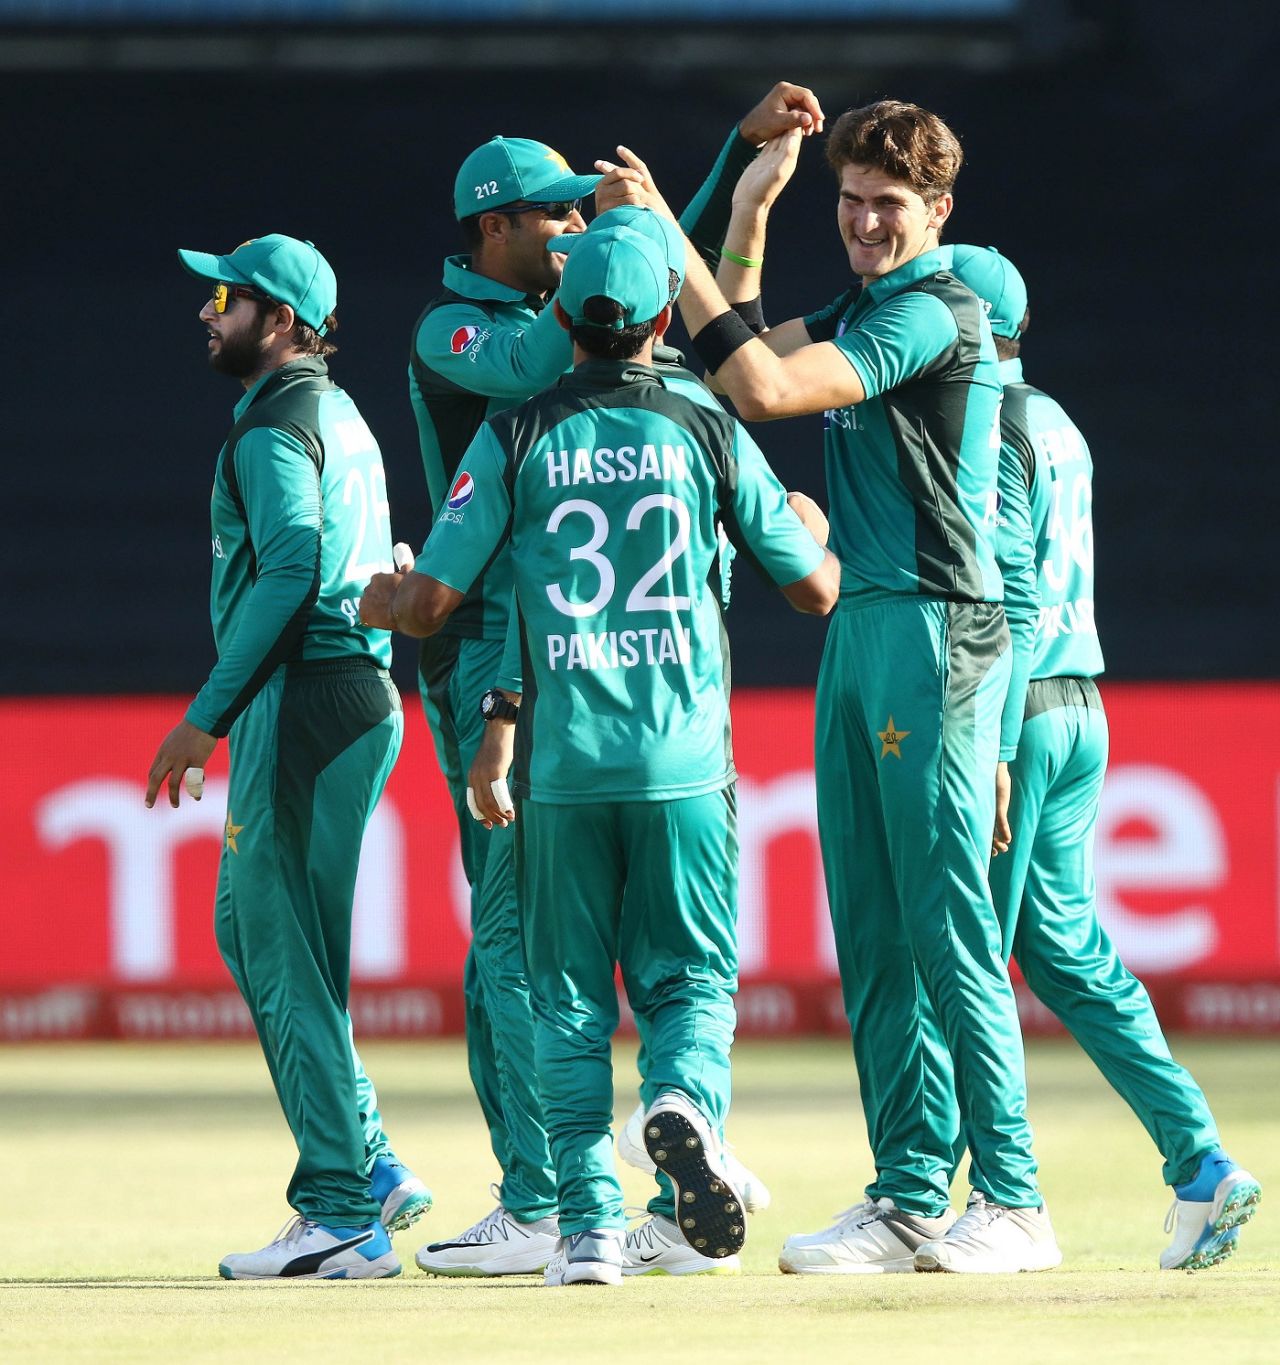 Shaheen Afridi celebrates a wicket, South Africa v Pakistan, 2nd ODI, Durban, January 22, 2019